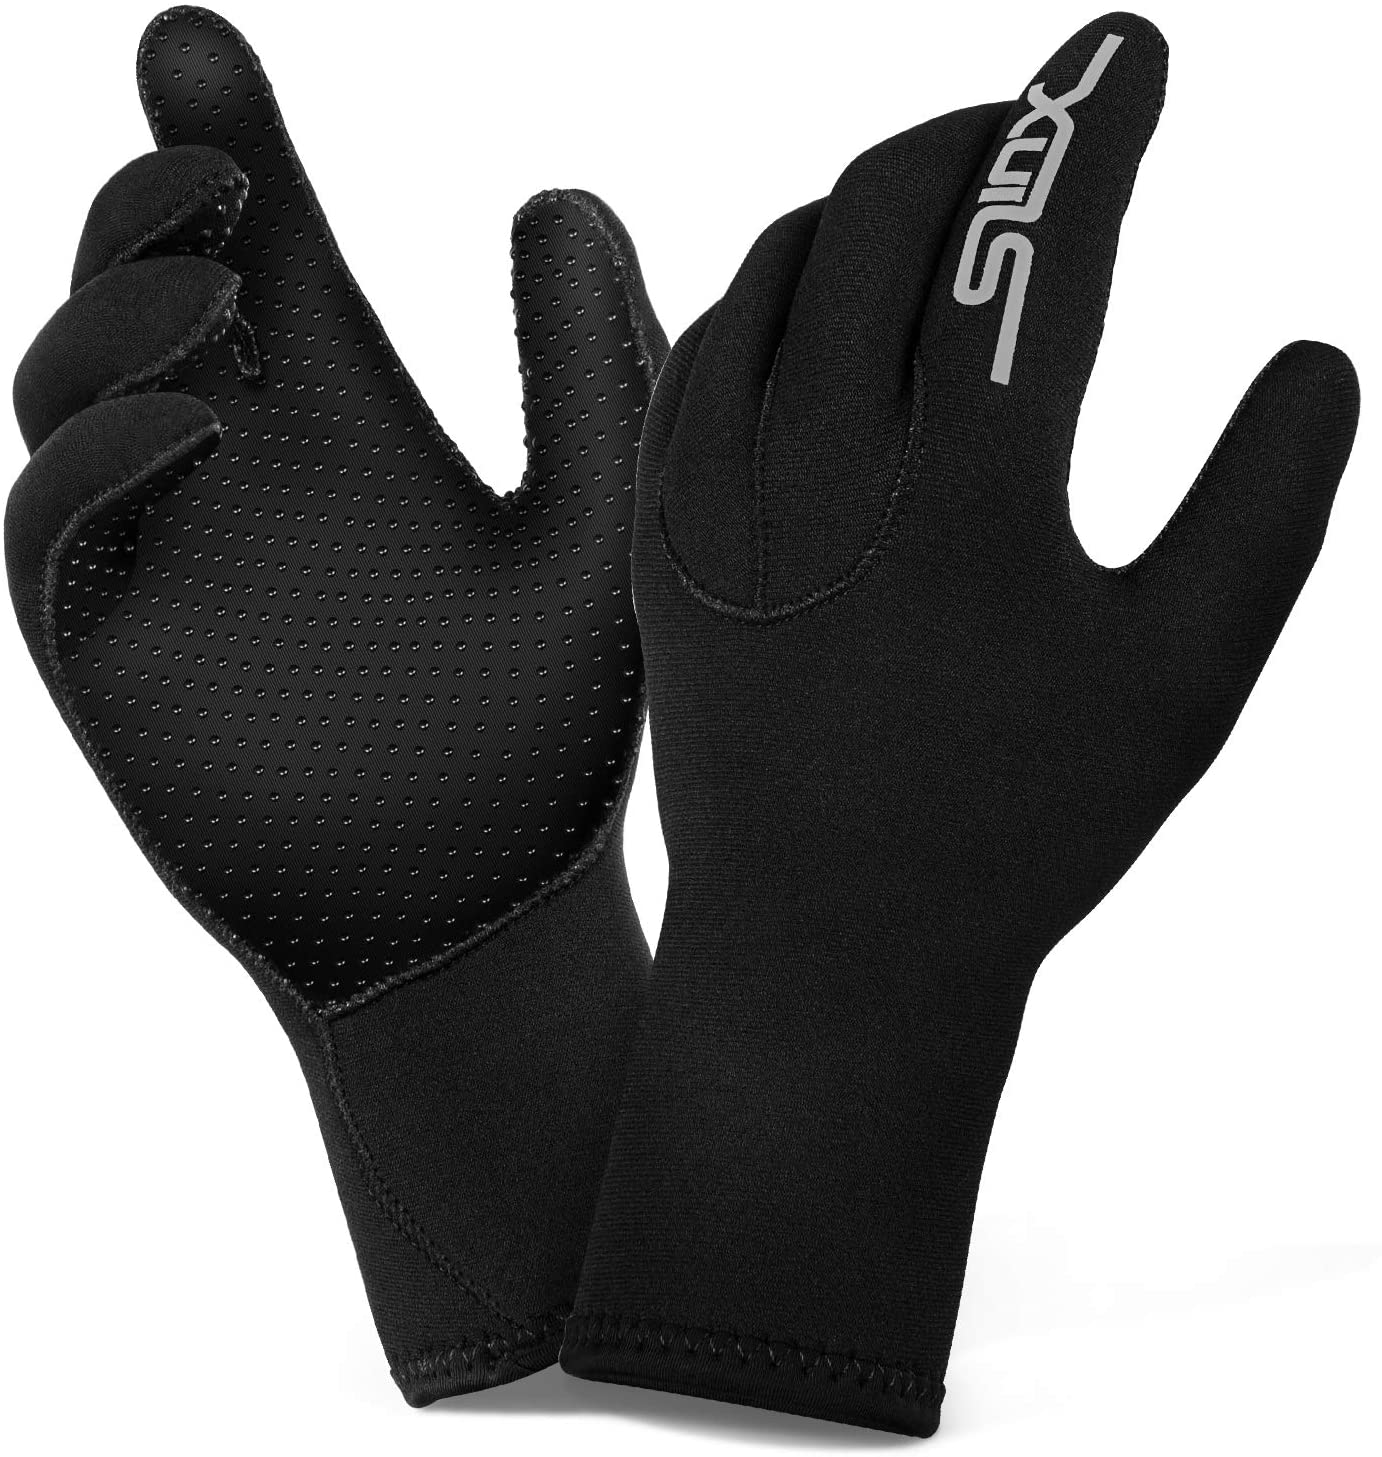 ZIPOUTE Neoprene Diving Gloves